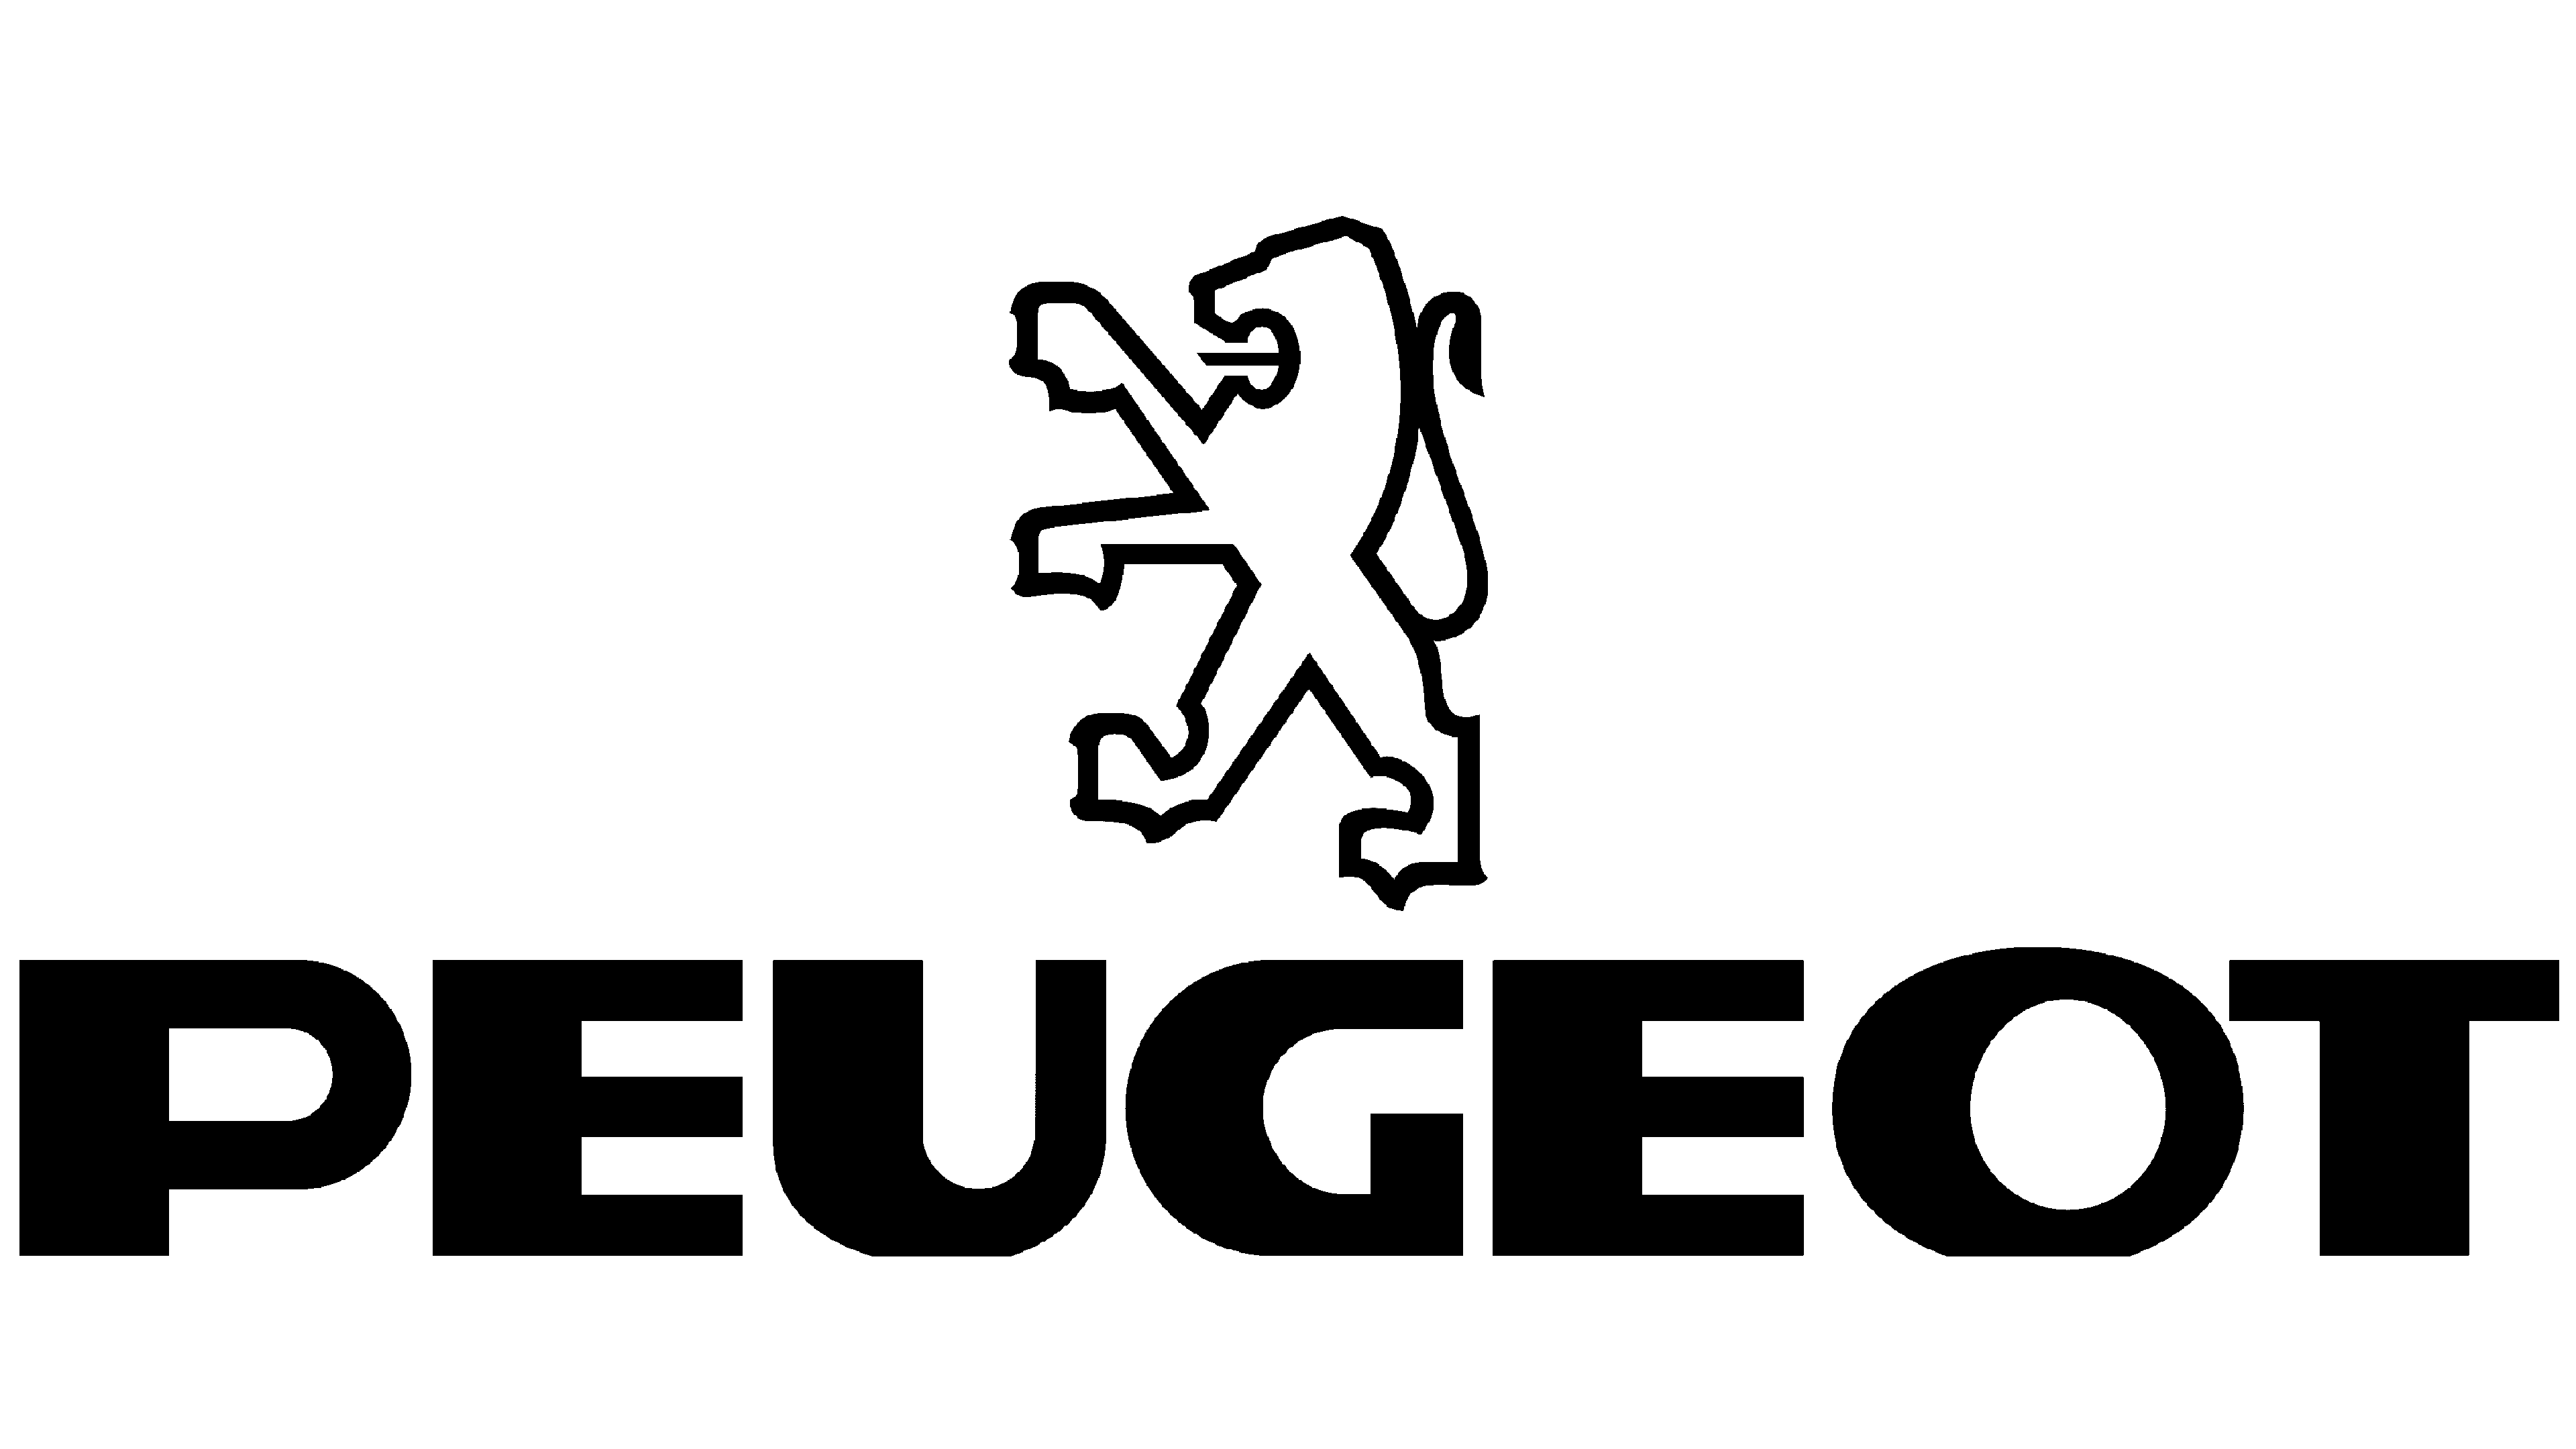 Peugeot Emblem  Peugeot, Honda logo, ? logo